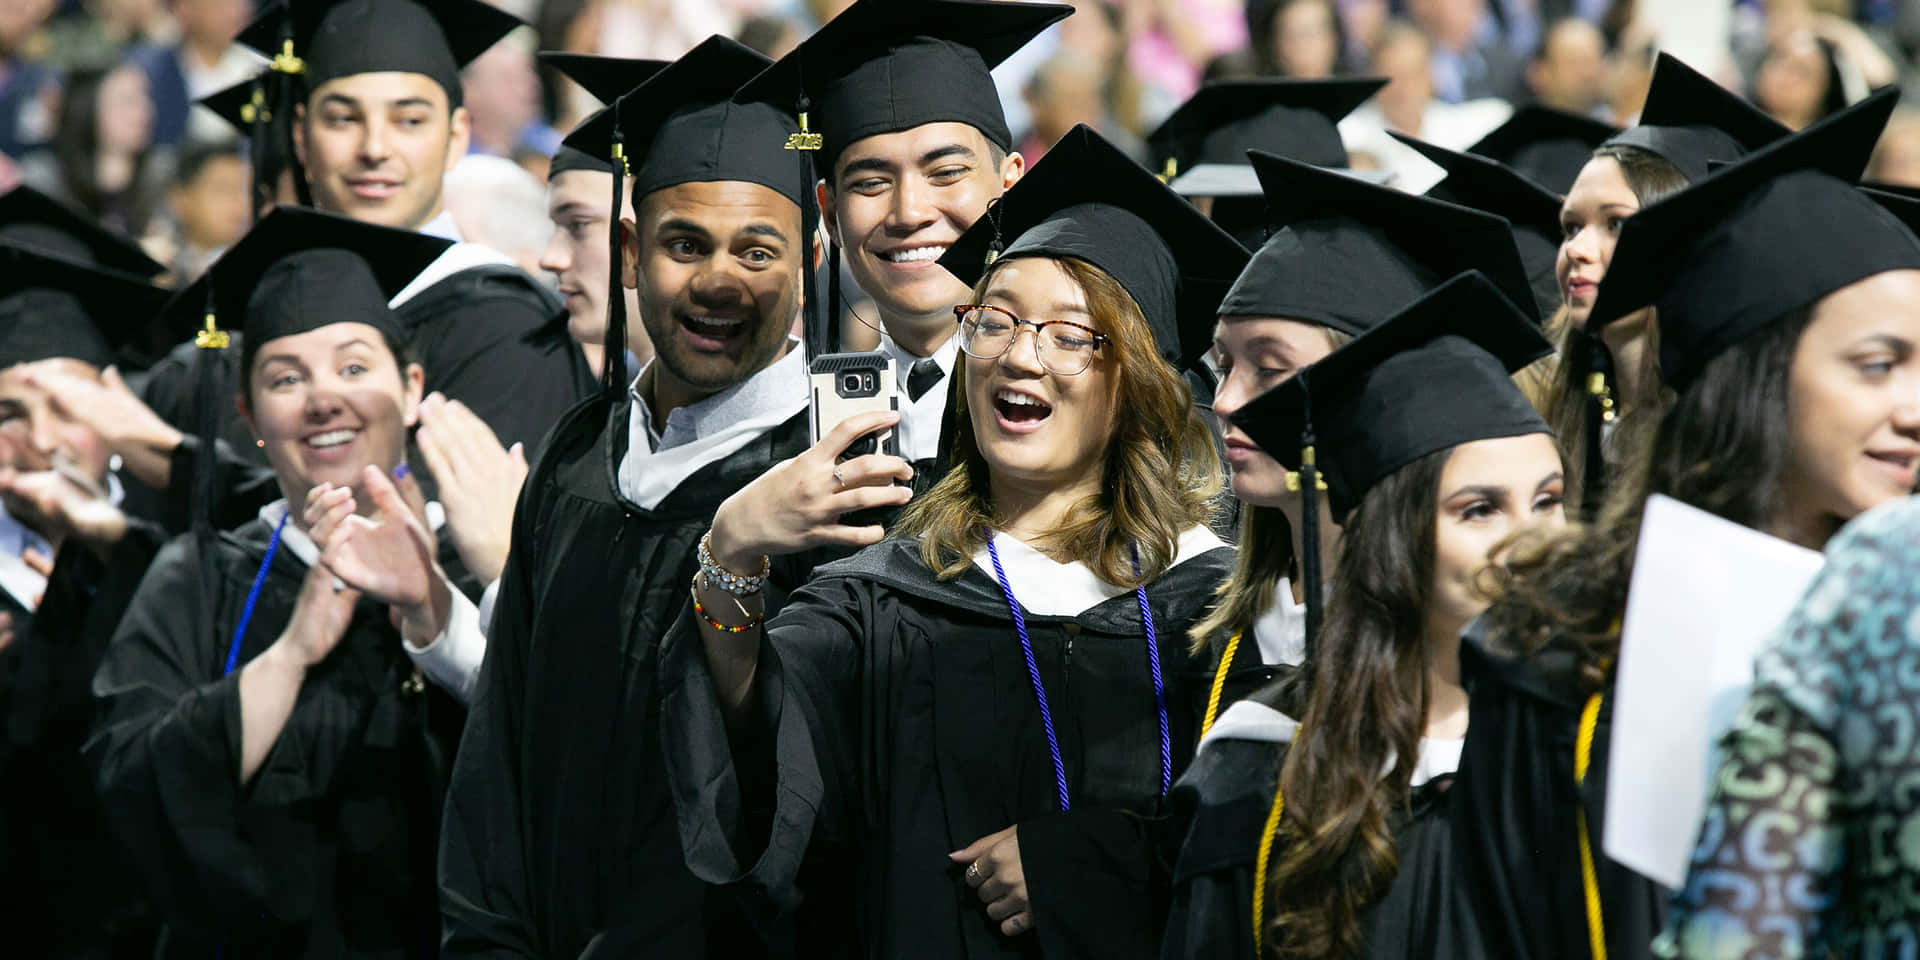 College Graduation Pictures